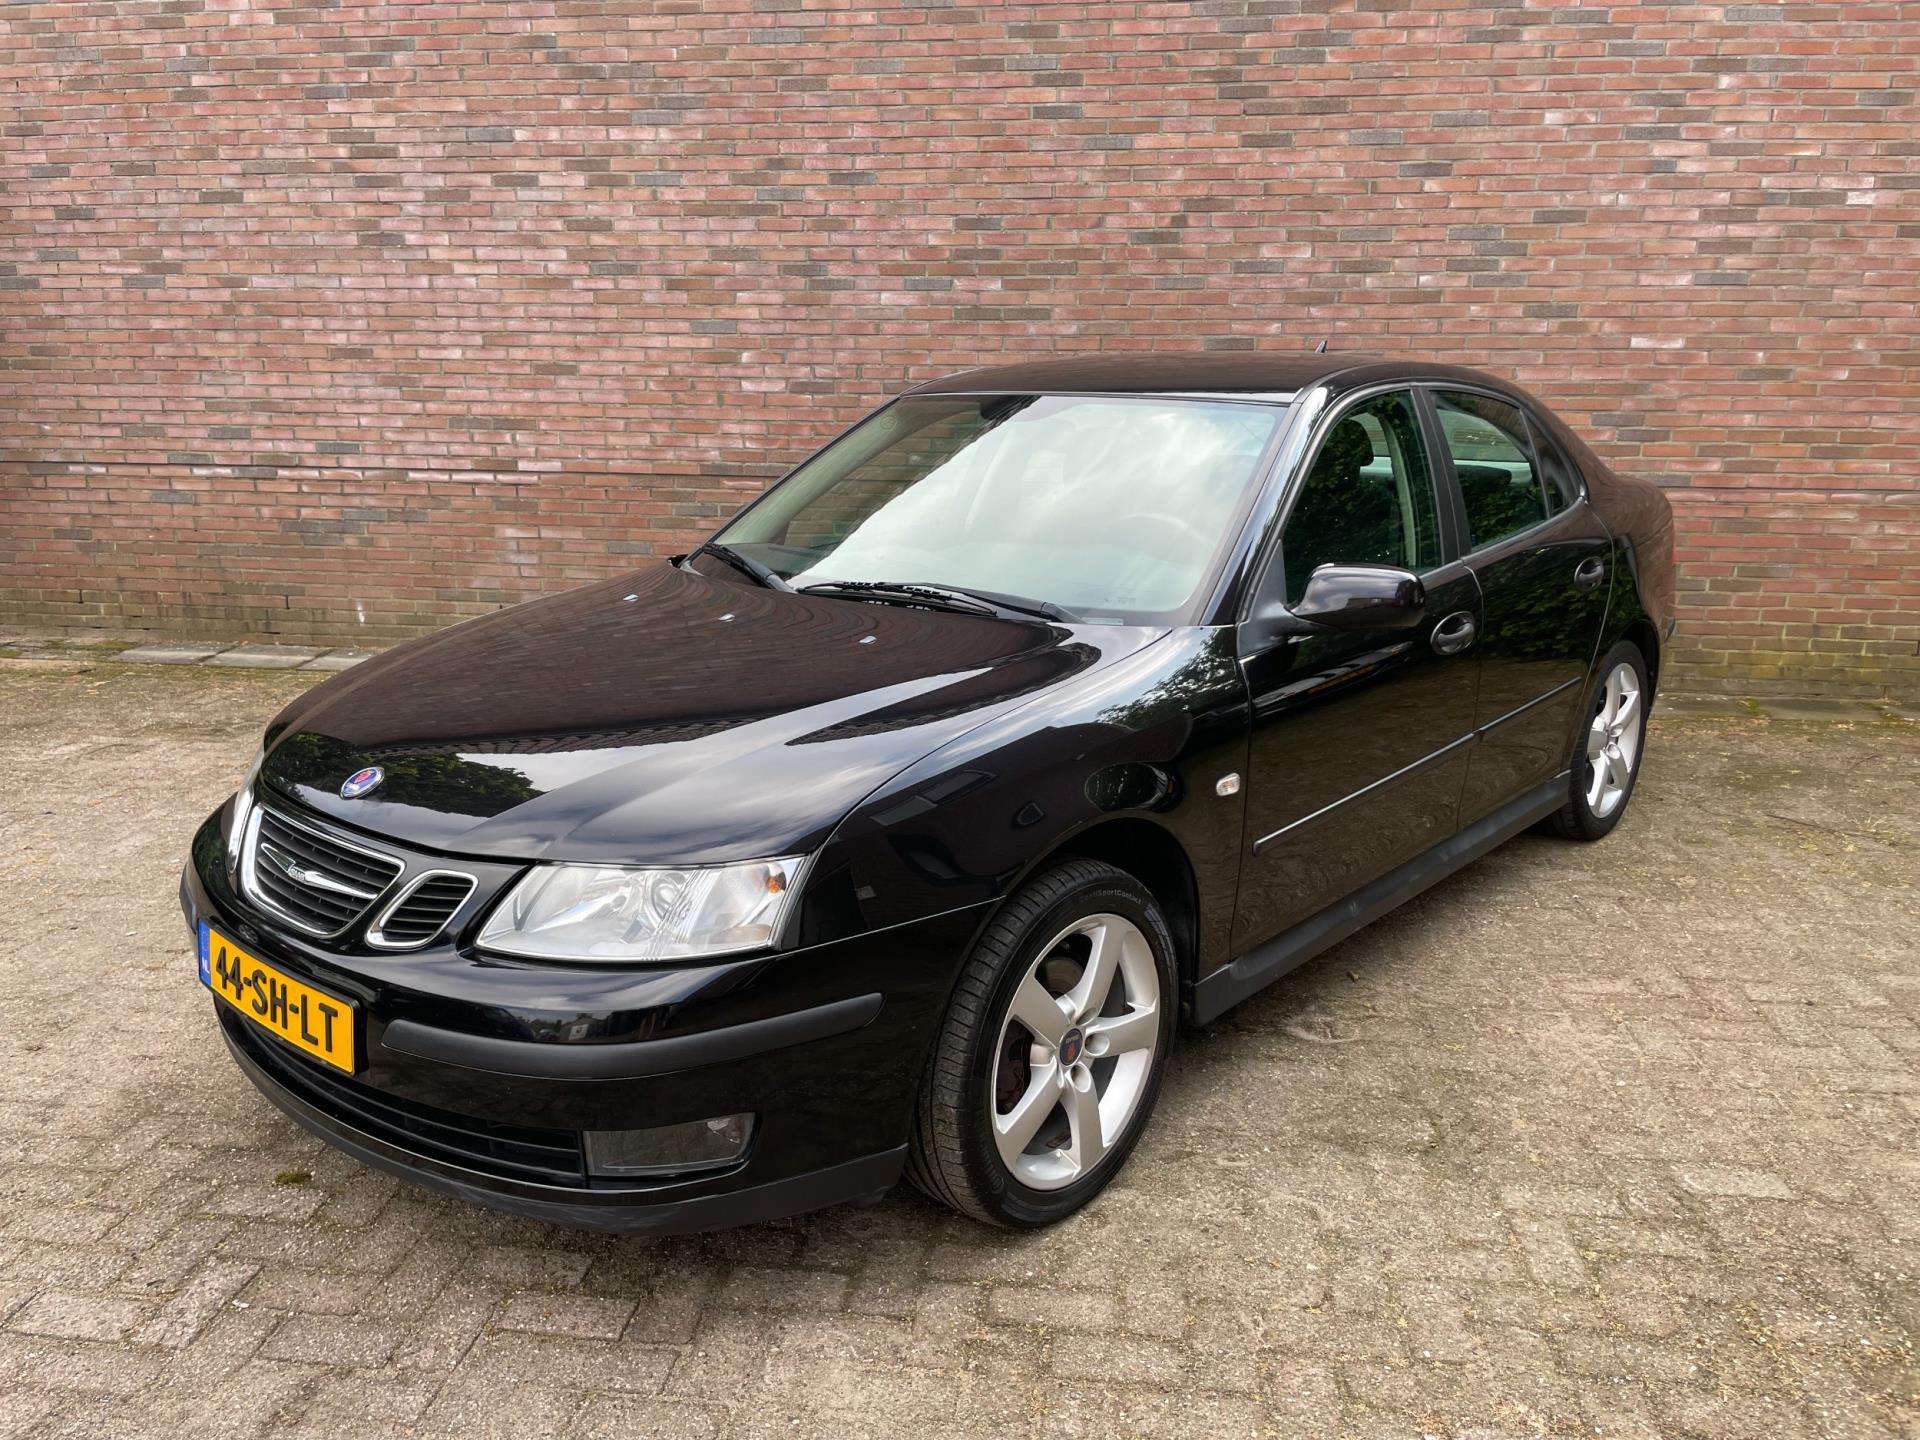 Saab 9-3 Sedan in Black used in EDE GLD for € 5,950.-